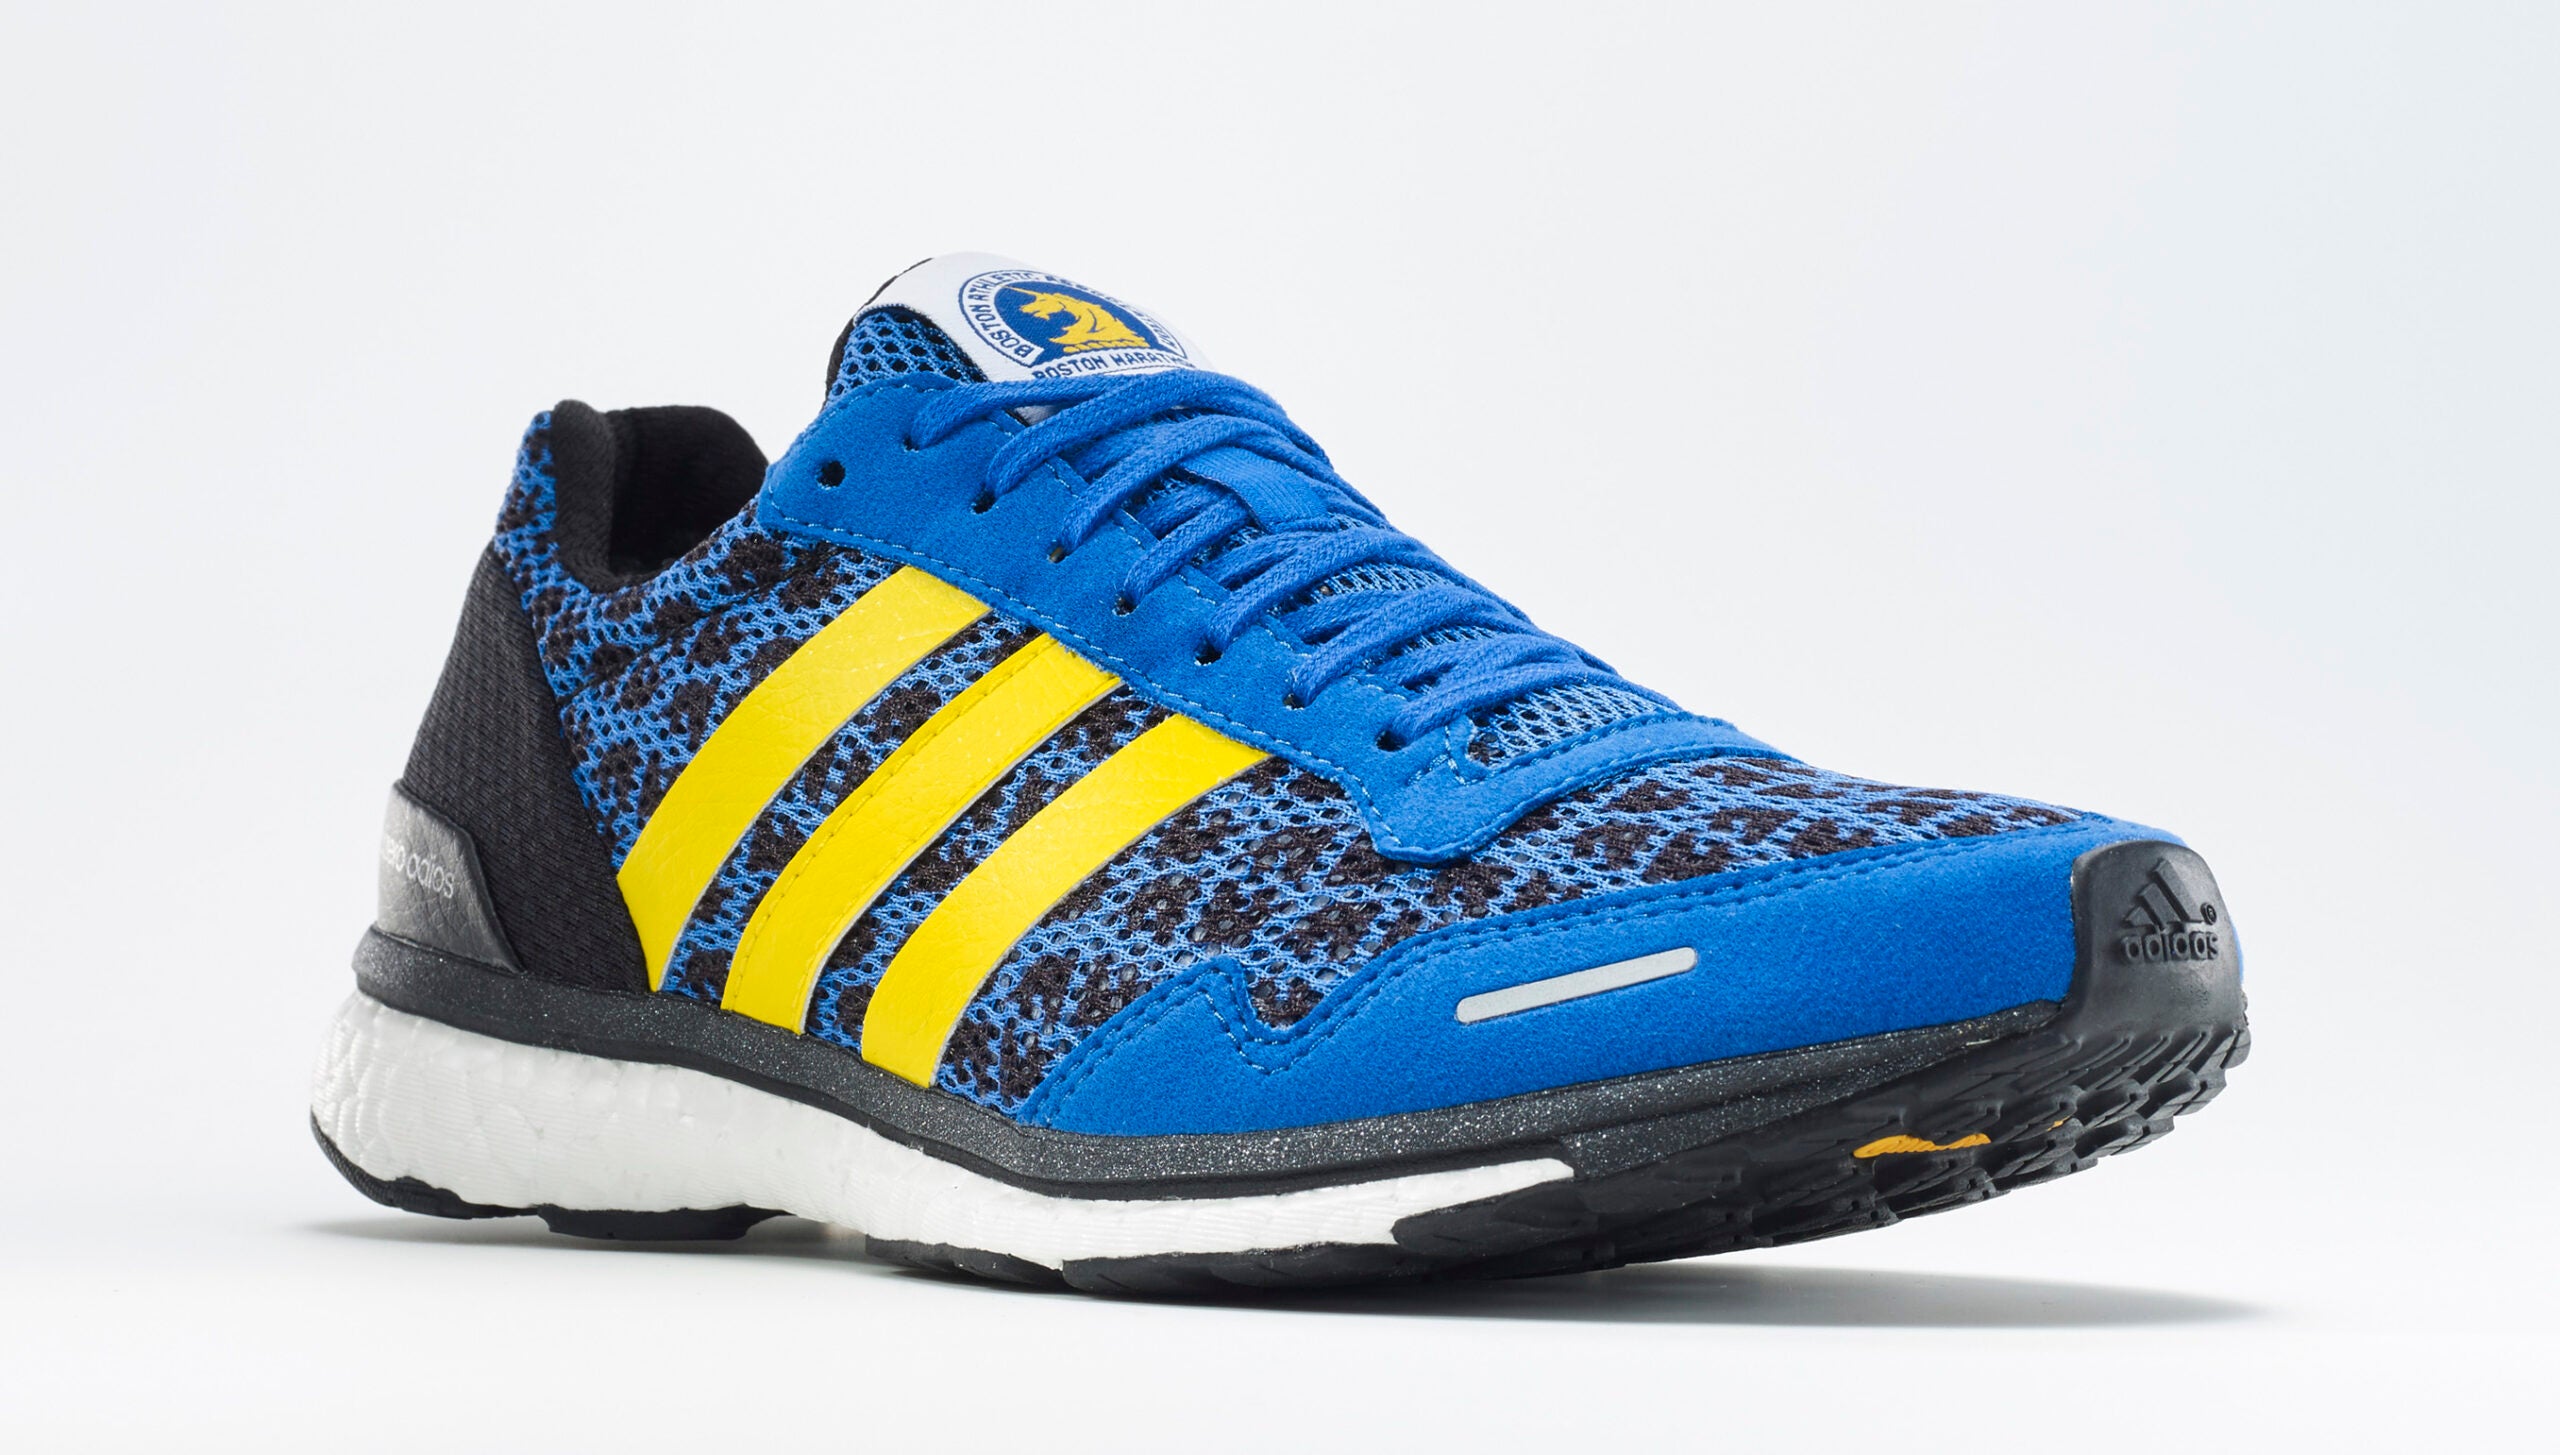 The new Adidas Boston Marathon sneaker design is here